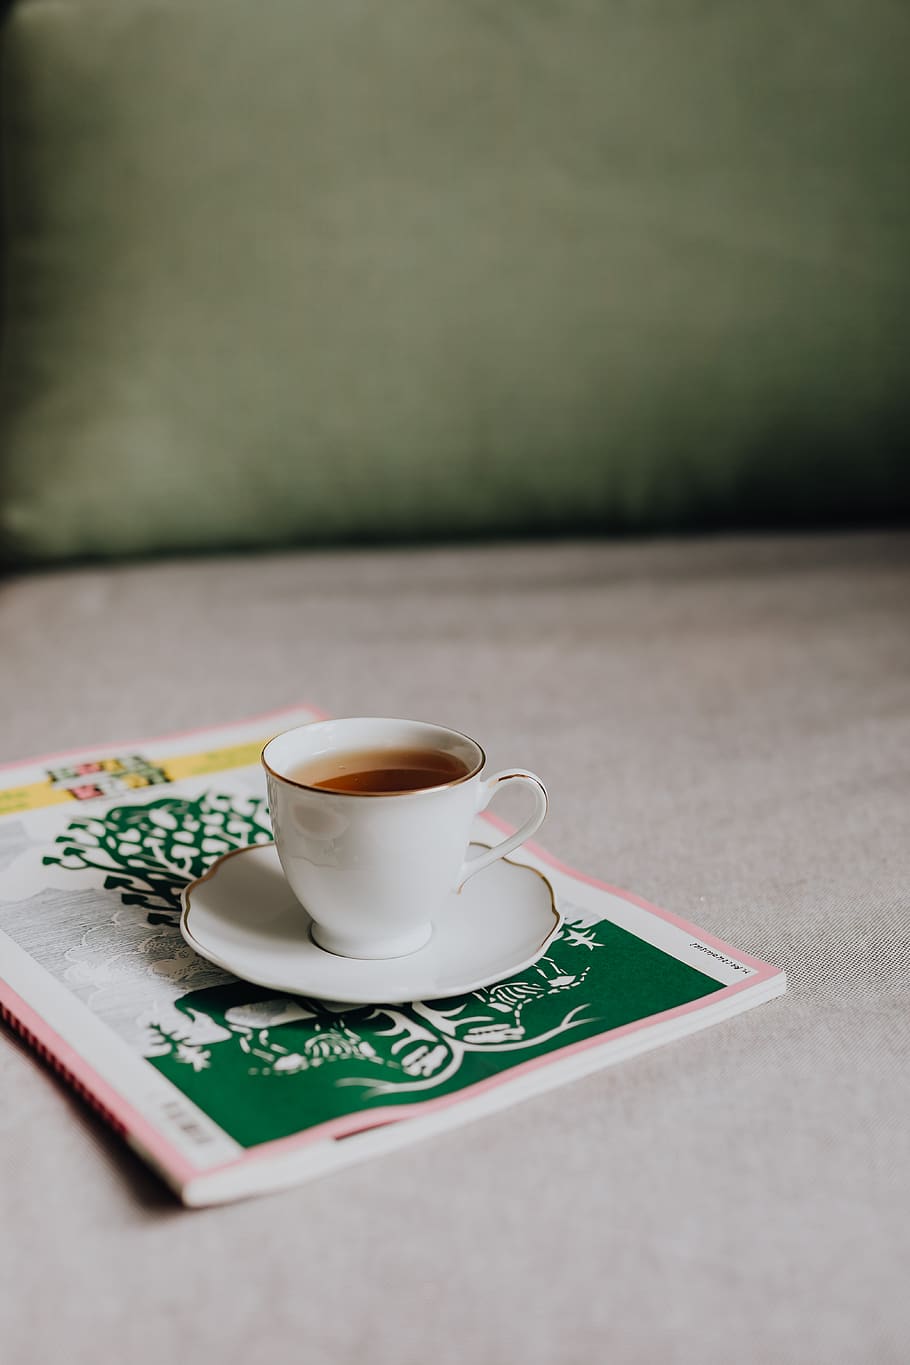 tea, porcelain, china, newspaper, reading, morning, Cup, drink, mug, table